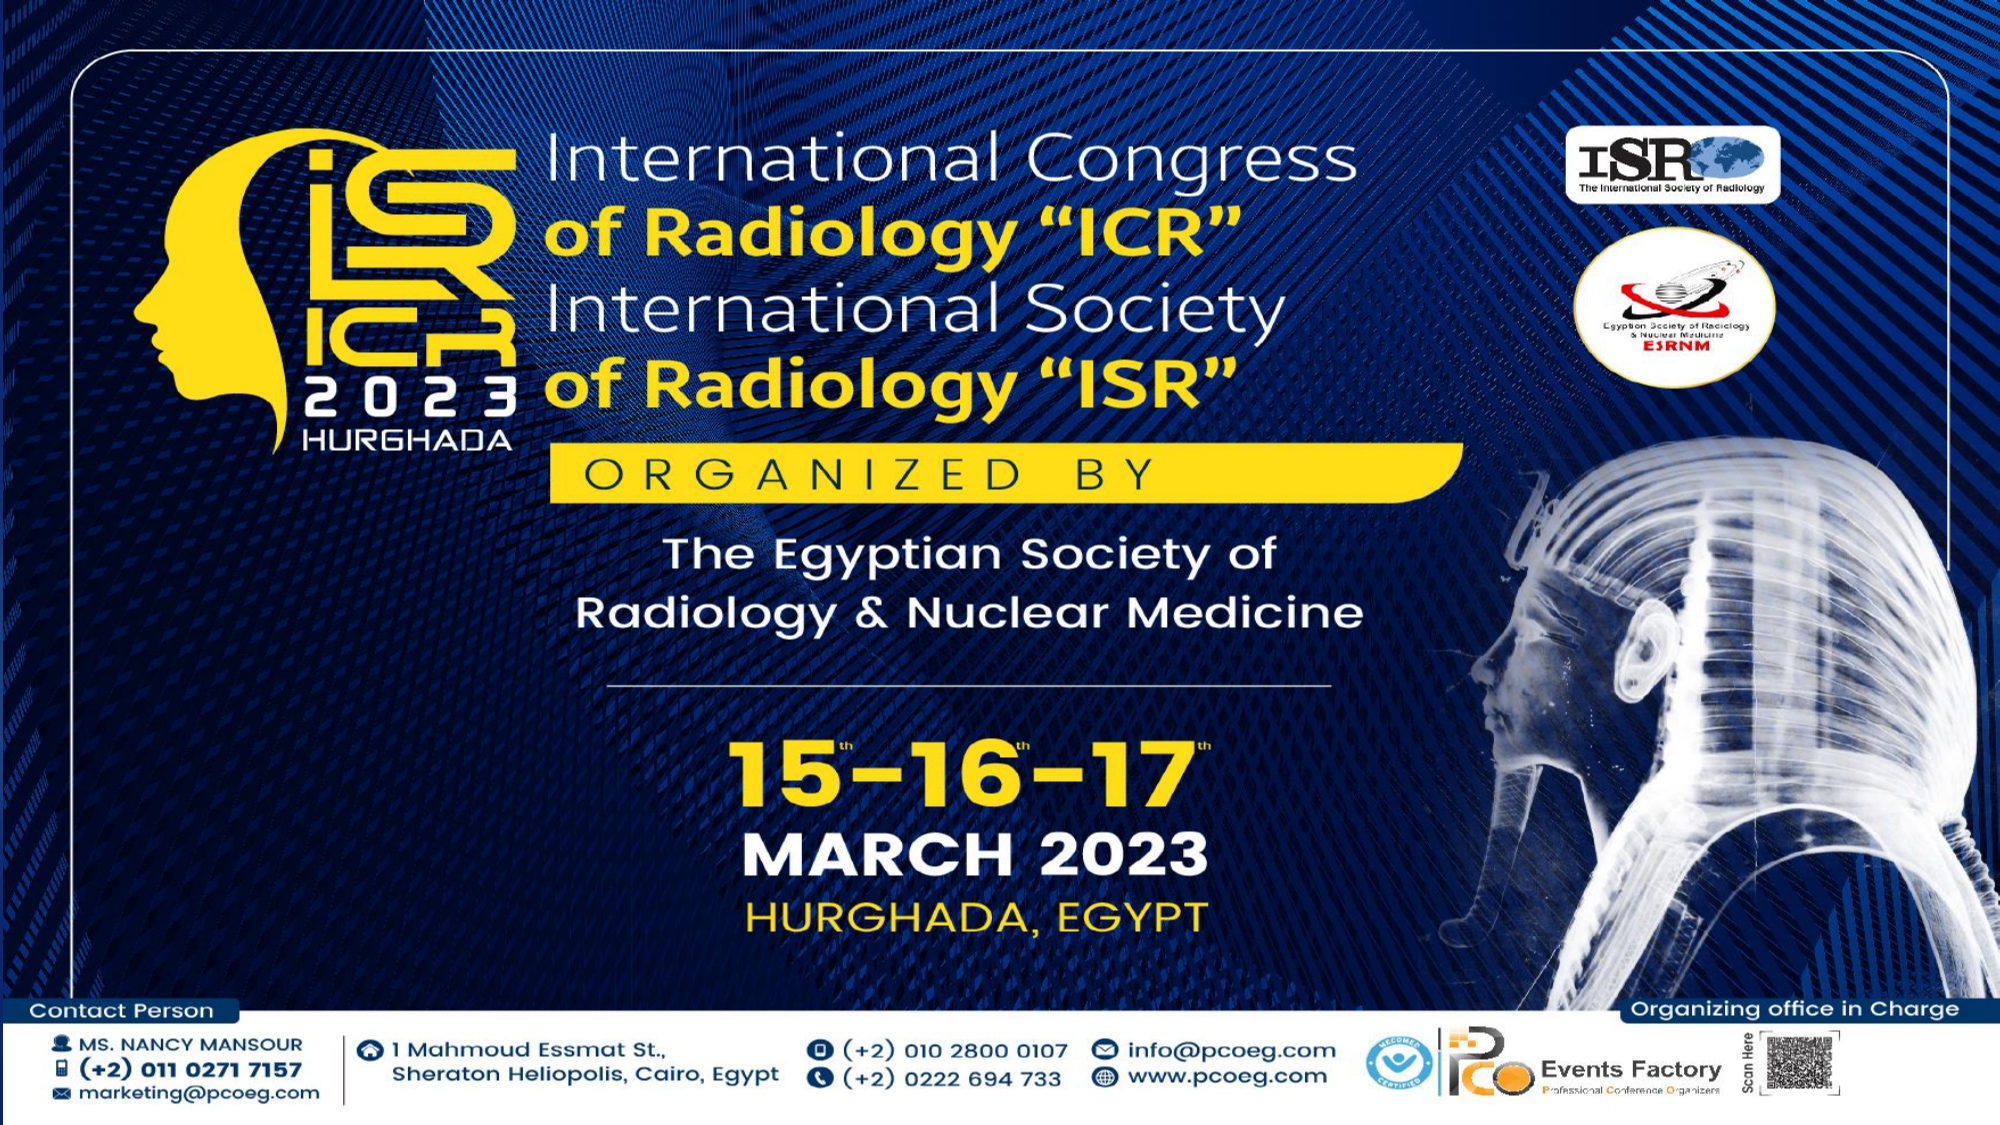 International Congress of Radiology “ICR 